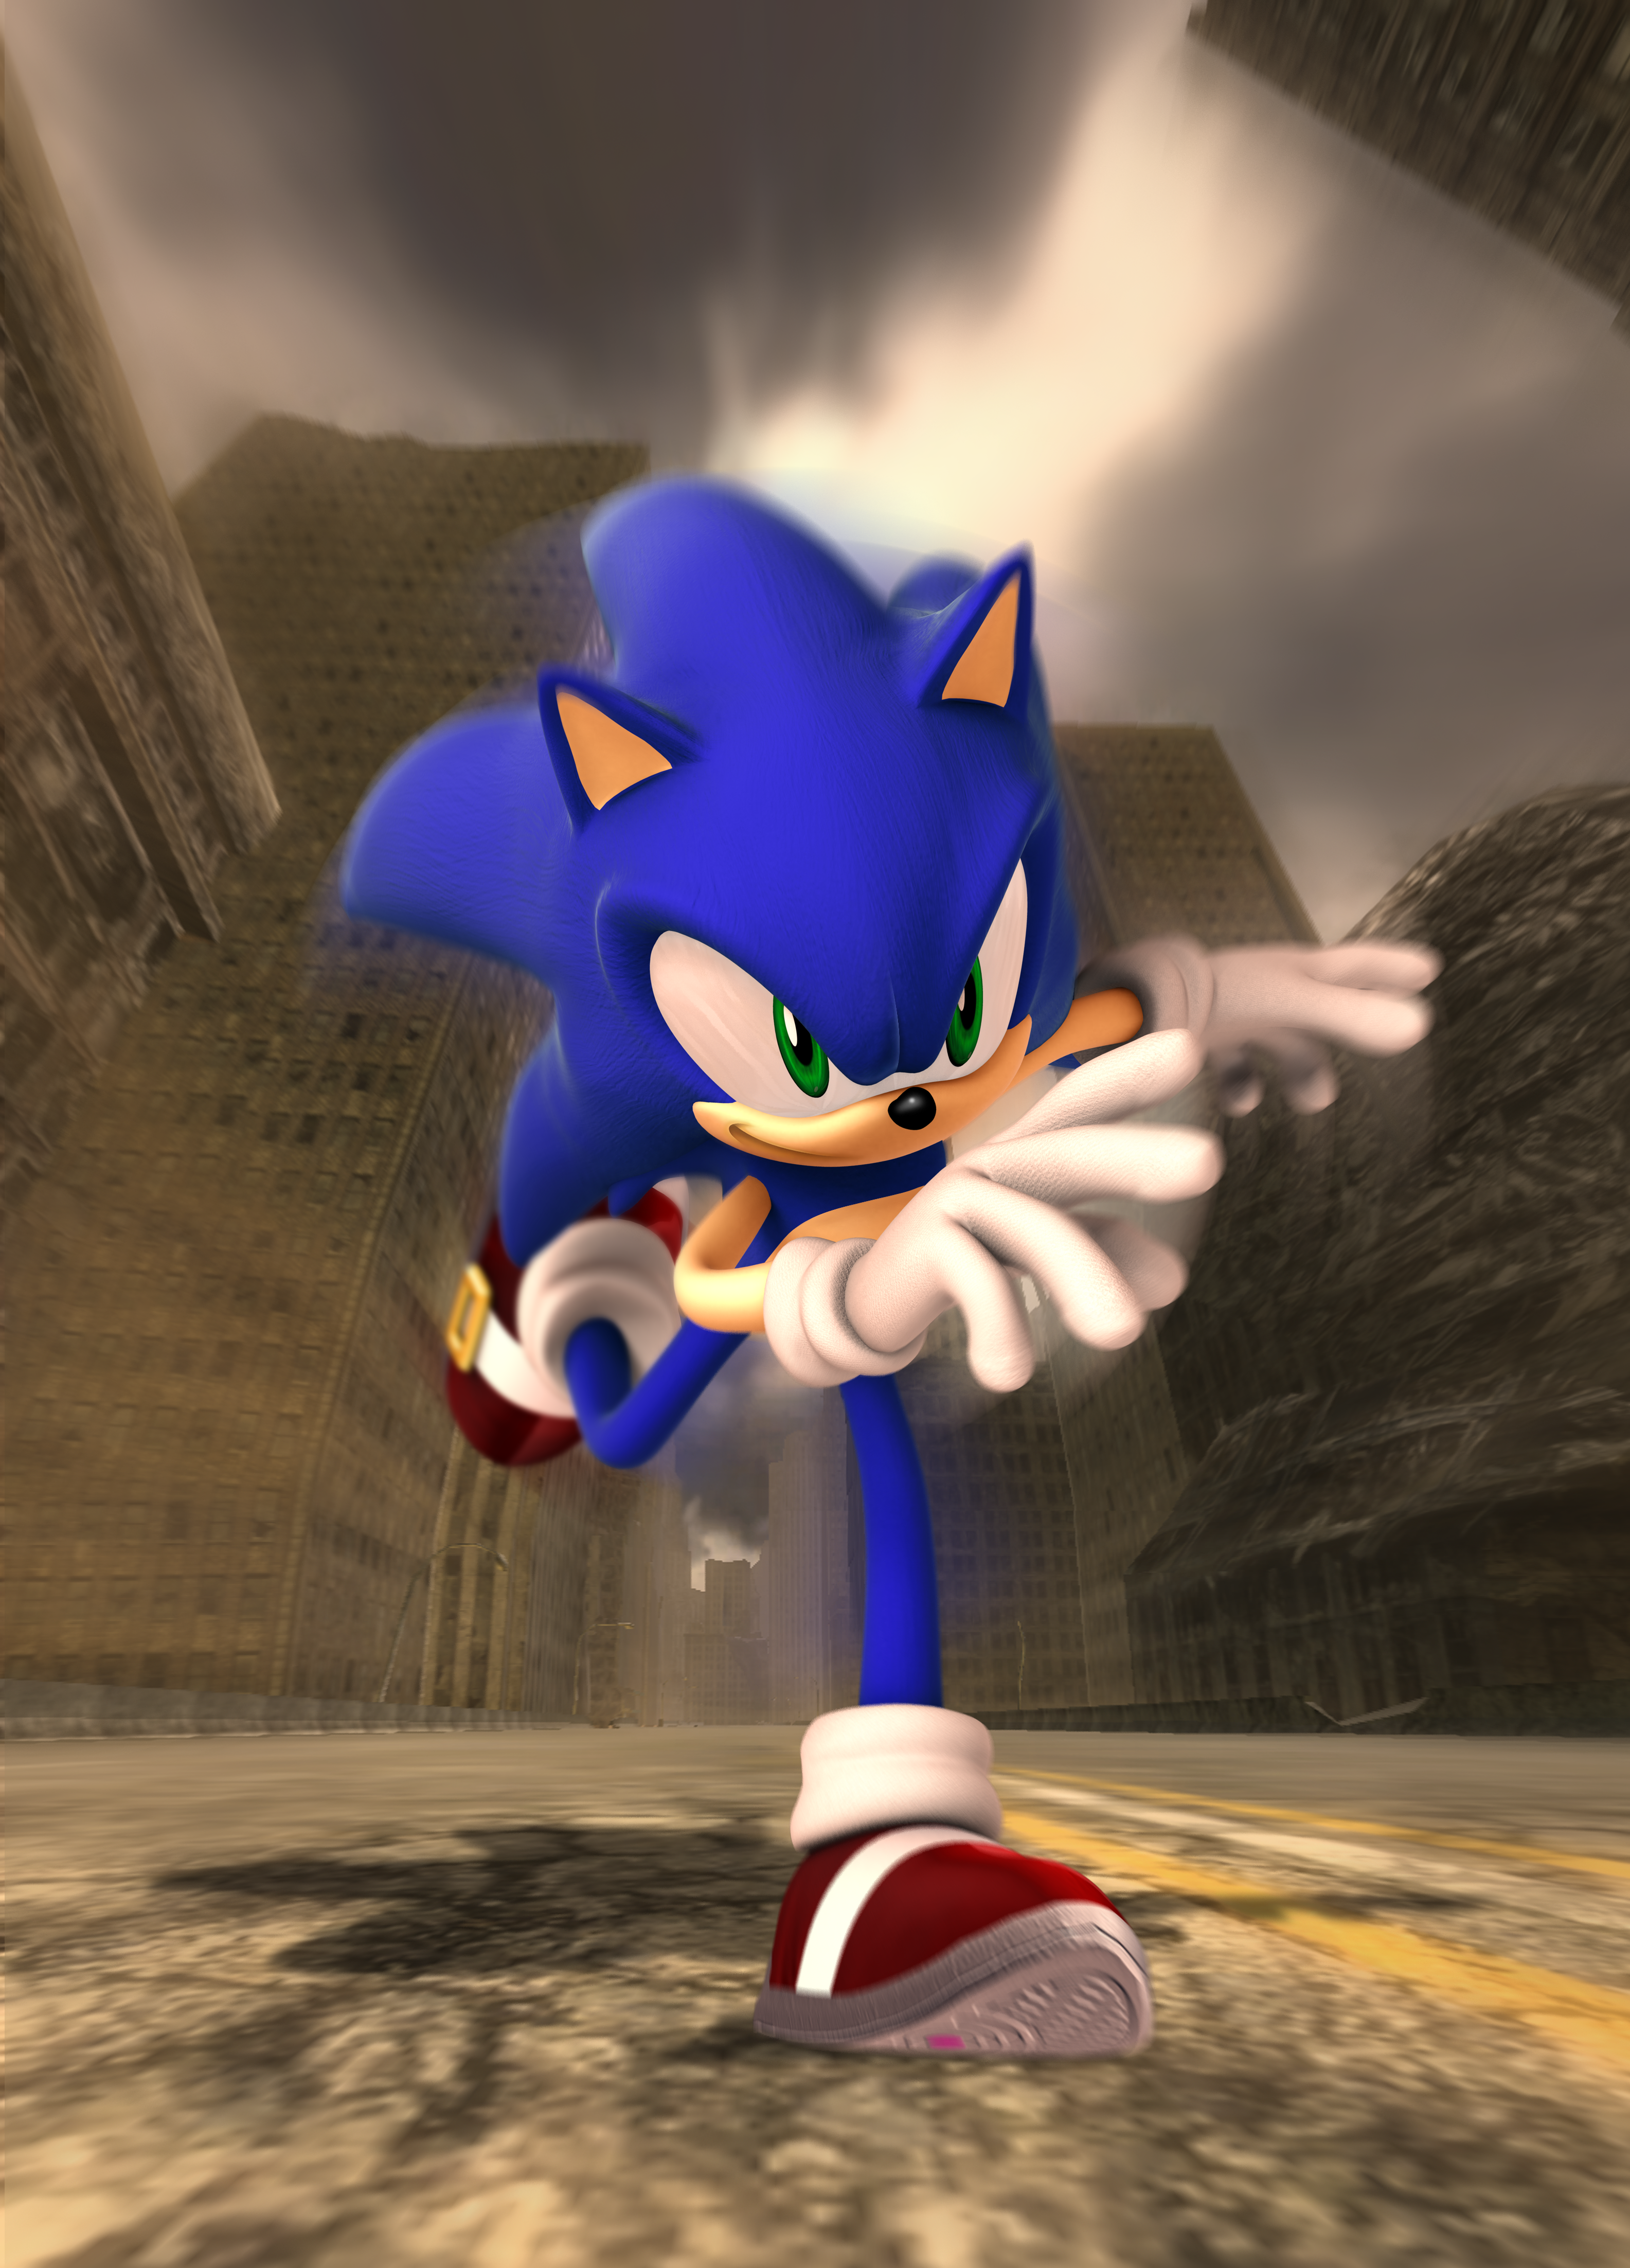 Видео про соников. Sonic the Hedgehog (игра, 2006). Ёж Соник 2006. Соник Ежик 2006. Соник хеджхог 2006.